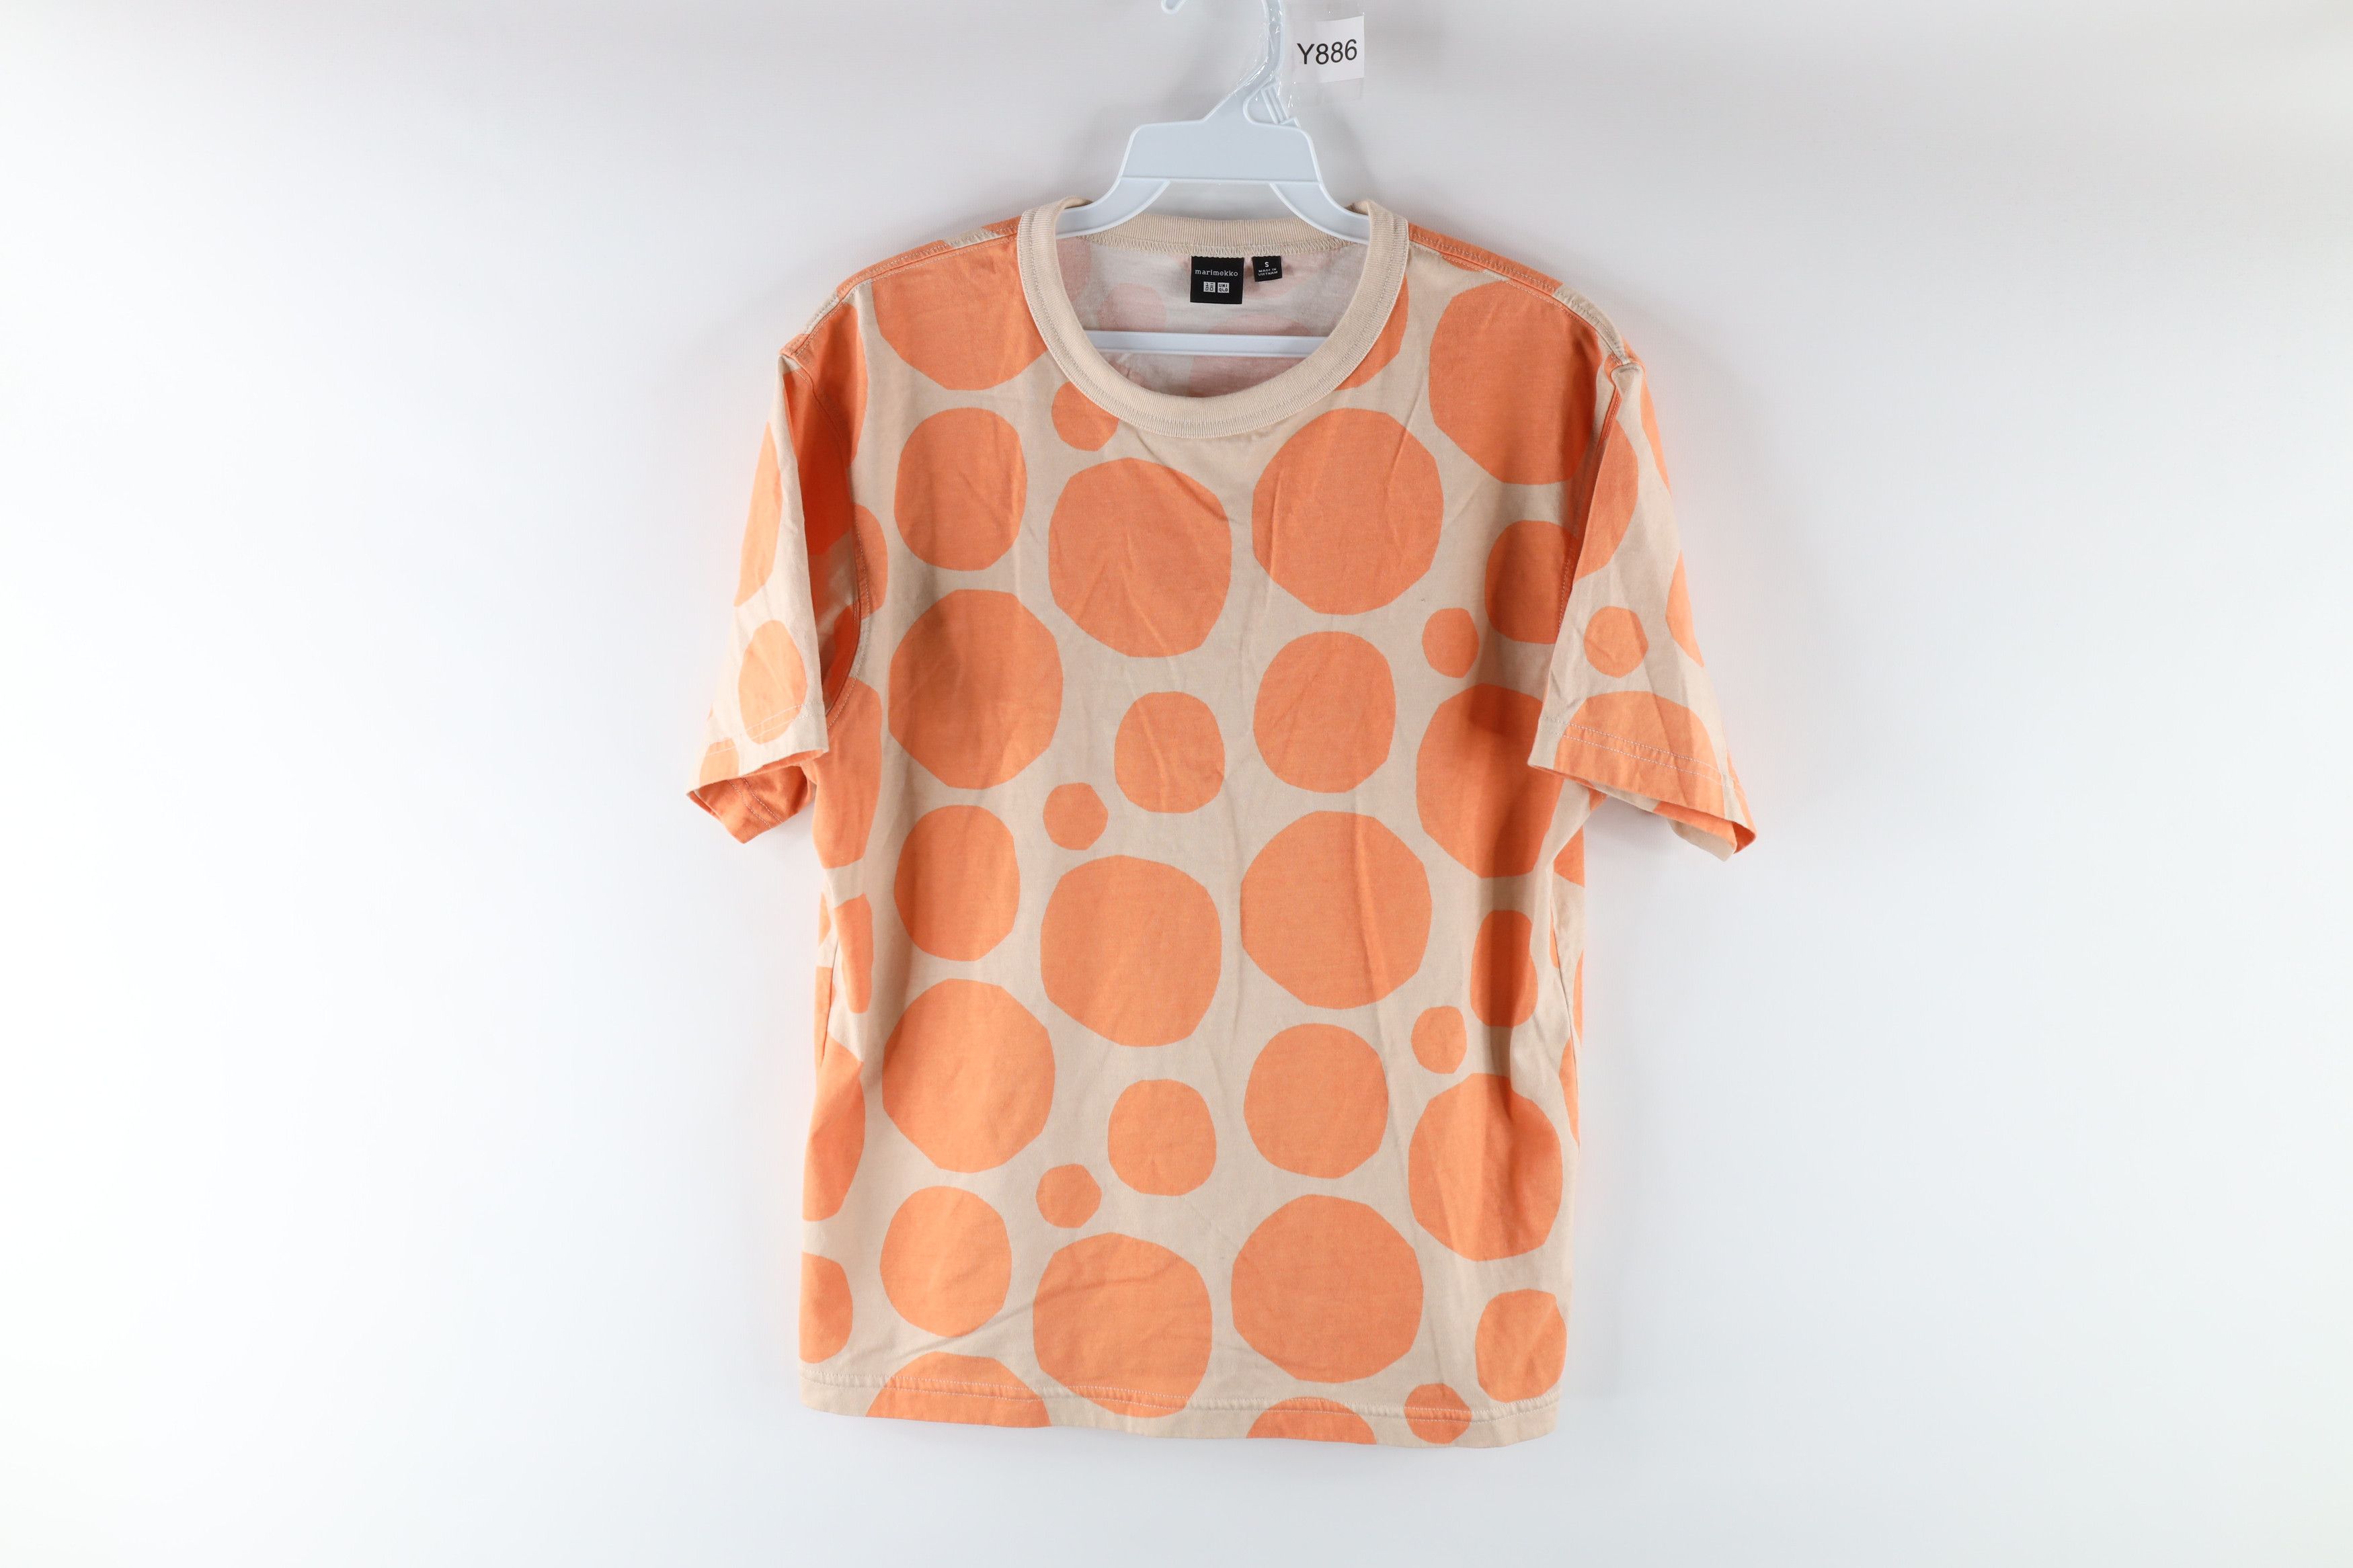 Uniqlo Uniqlo x Marimekko Polka Circle Print Short Sleeve T-Shirt Size S / US 4 / IT 40 - 1 Preview